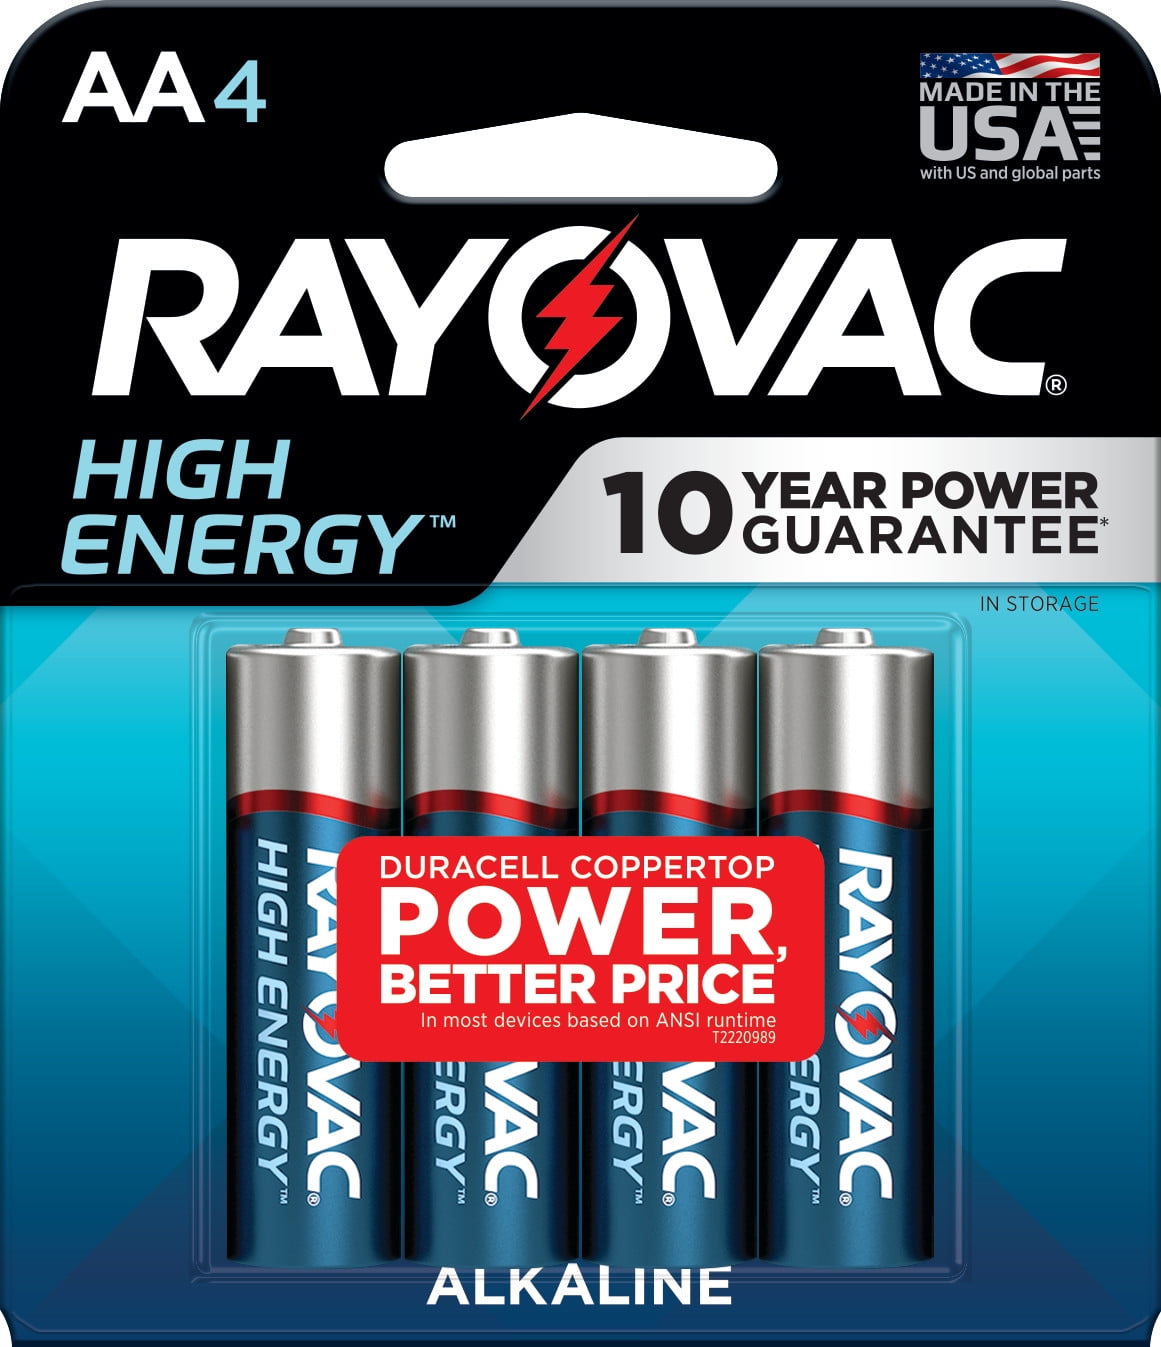 Rayovac High Energy AA 1.5V Alkaline Batteries, 4 count